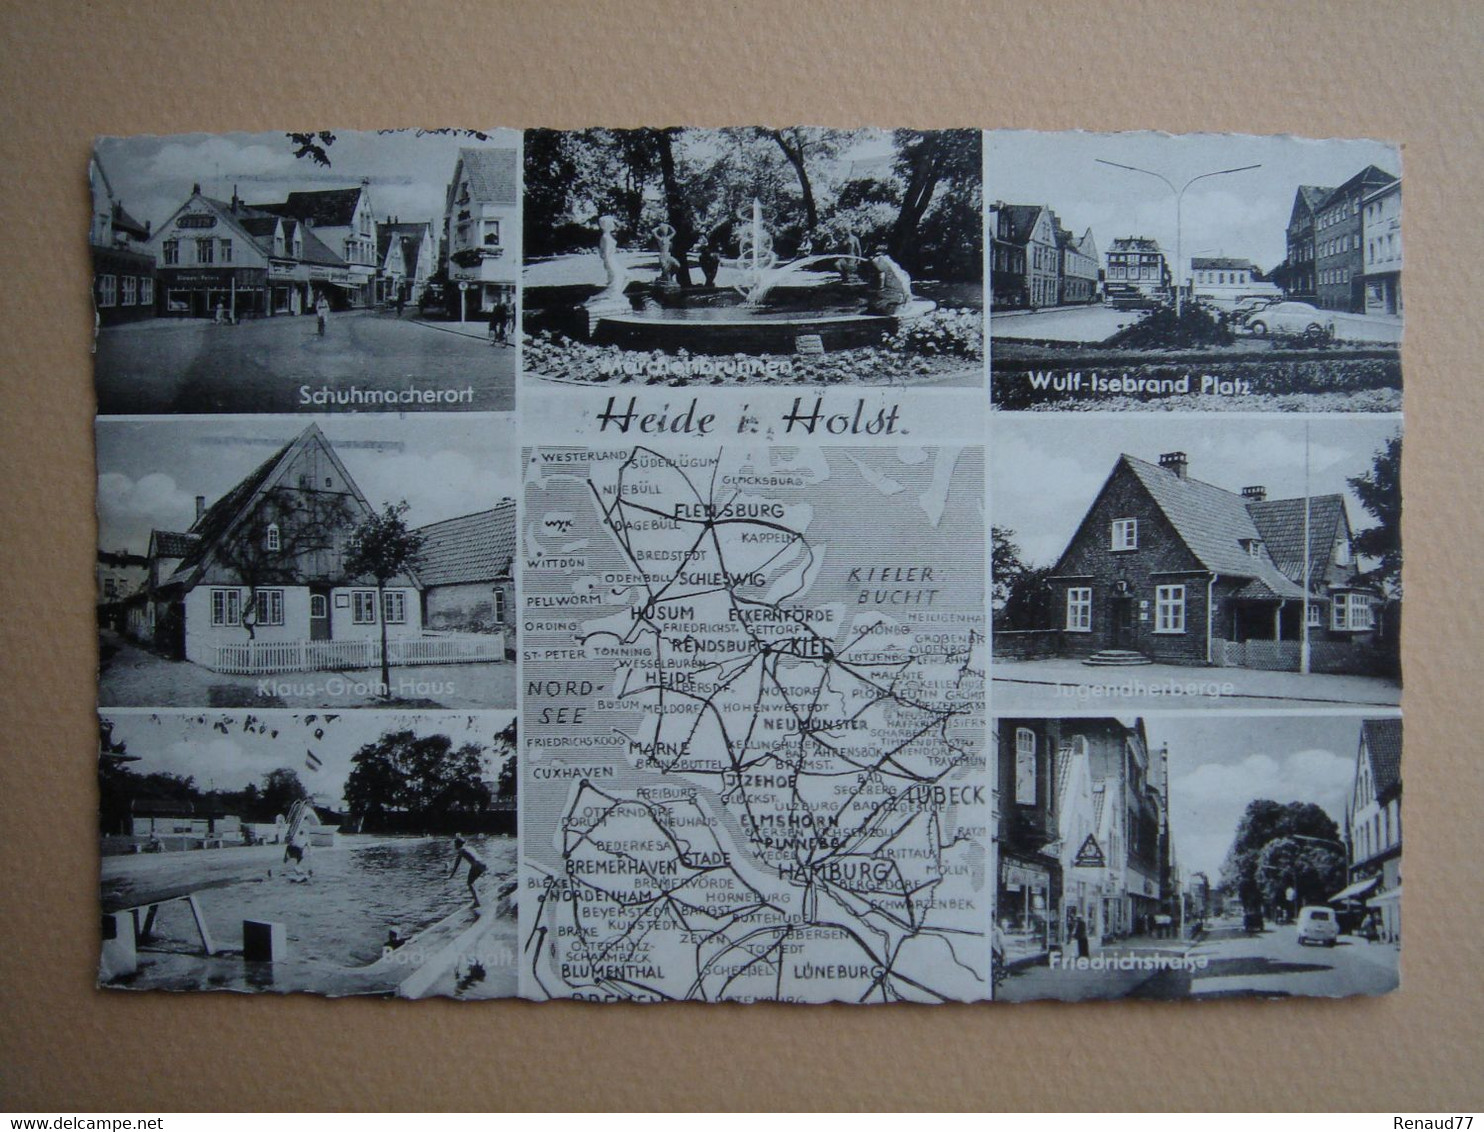 Heide - Heide